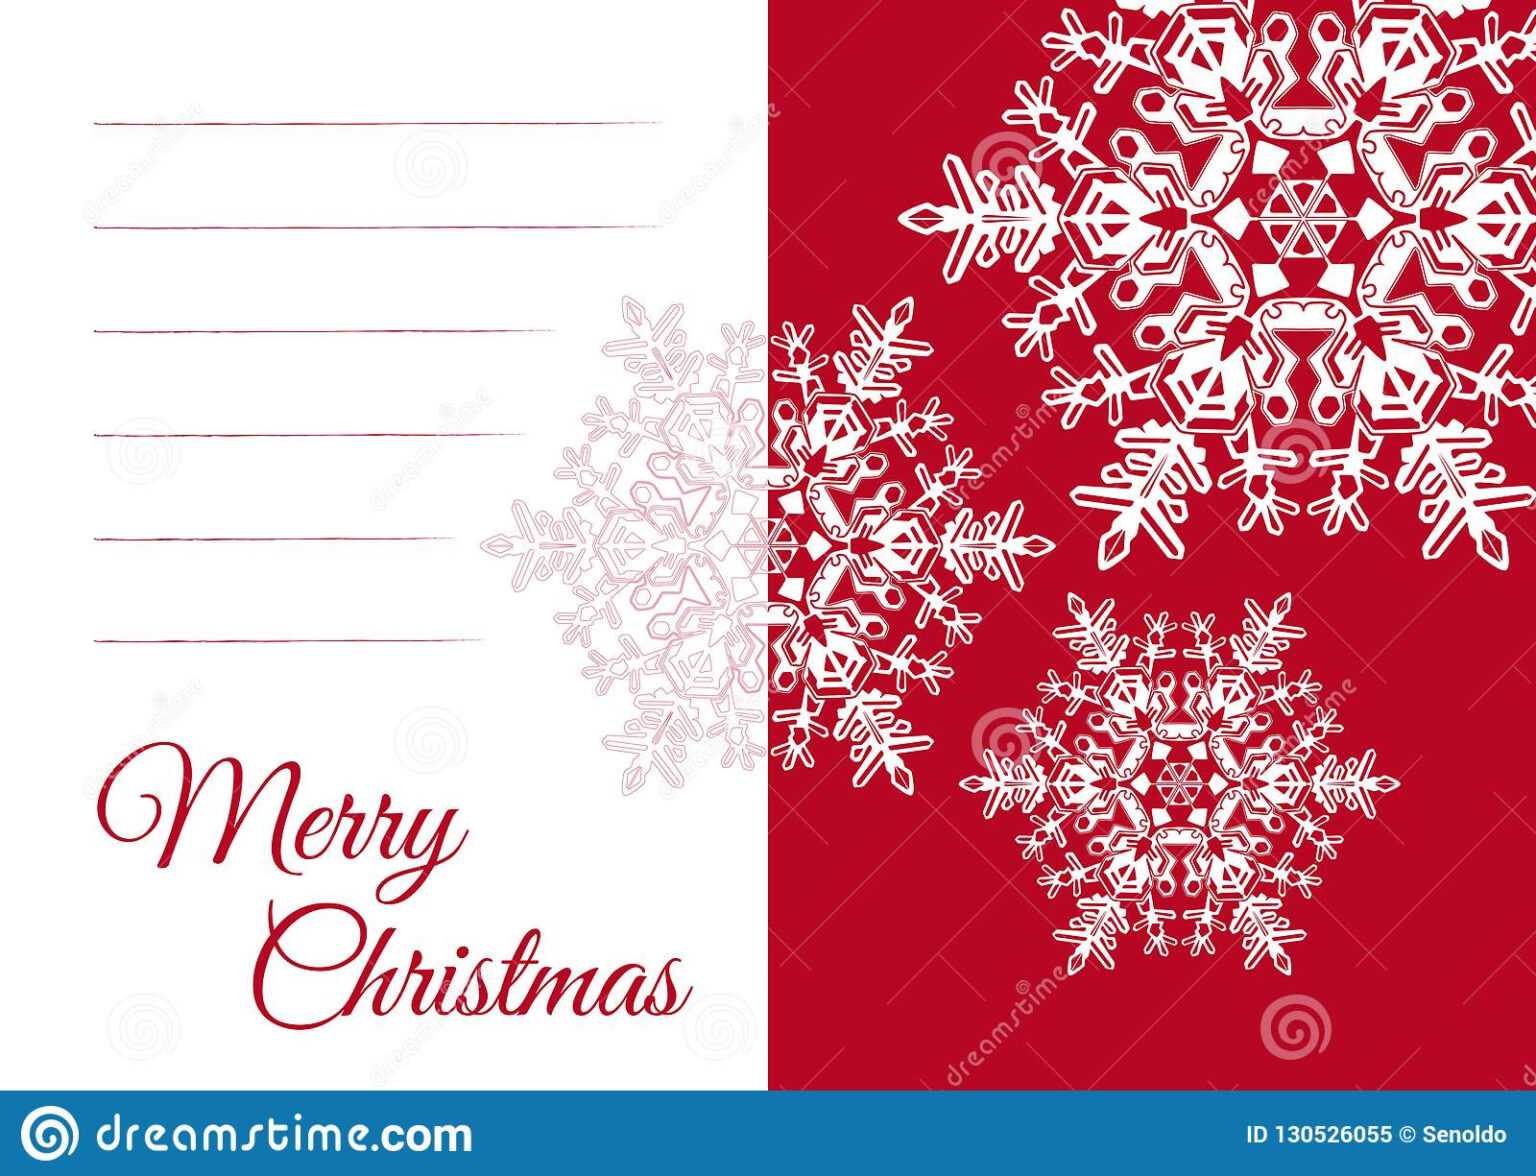 blank-christmas-card-templates-free